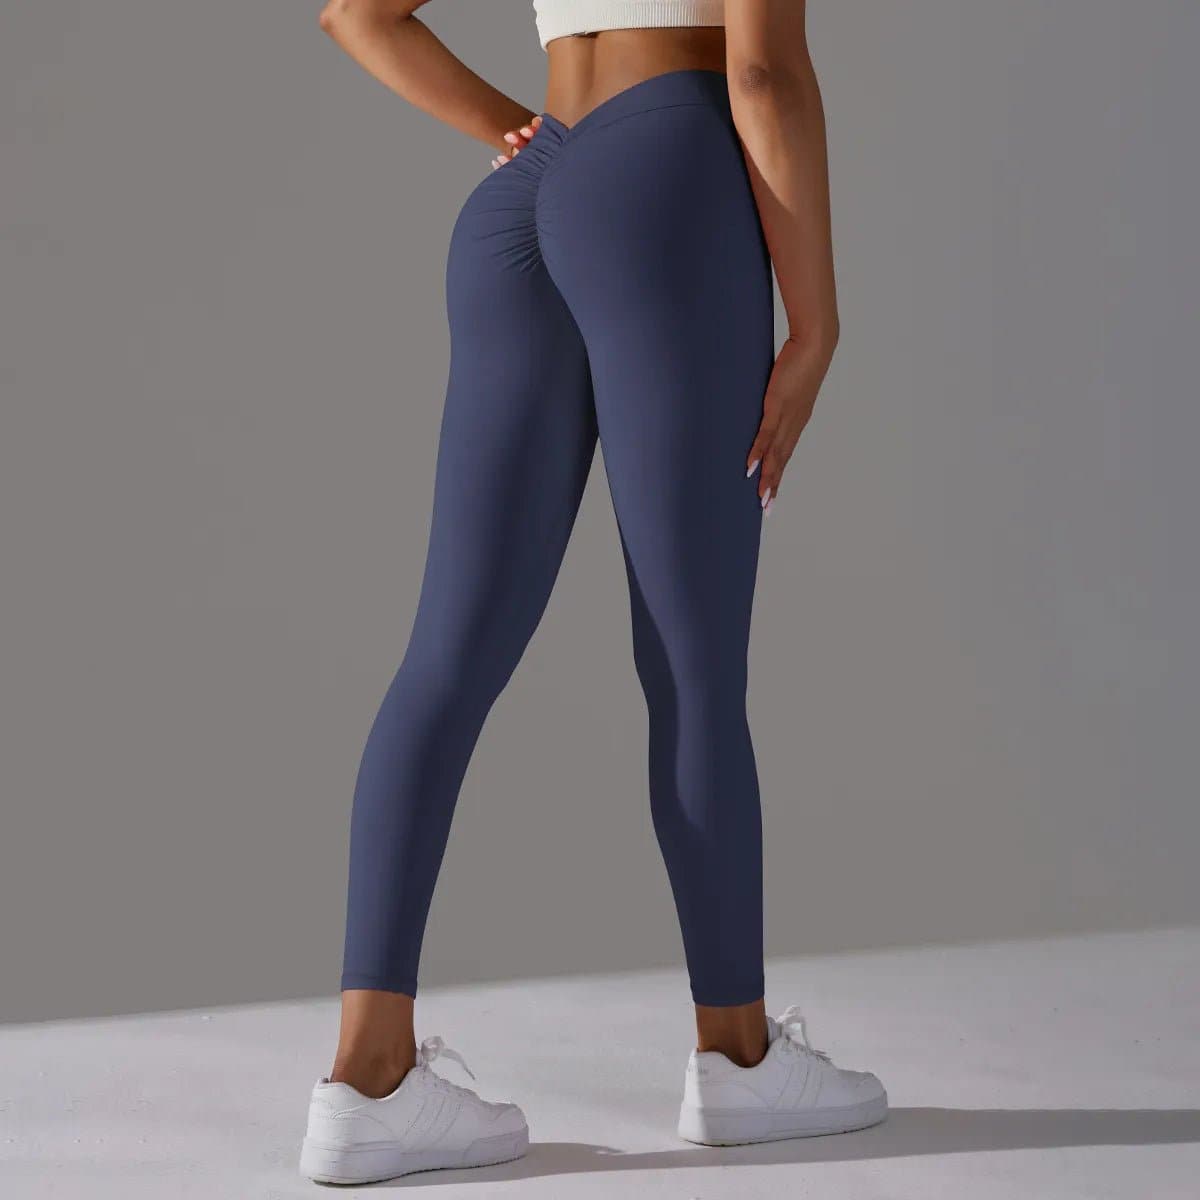 Yoga Fitness Leggings with Moisture-Wicking Nylon Fabric - Breathable & Flexible - Ankle-Length Pants - Hamidou Brand - Wandering Woman